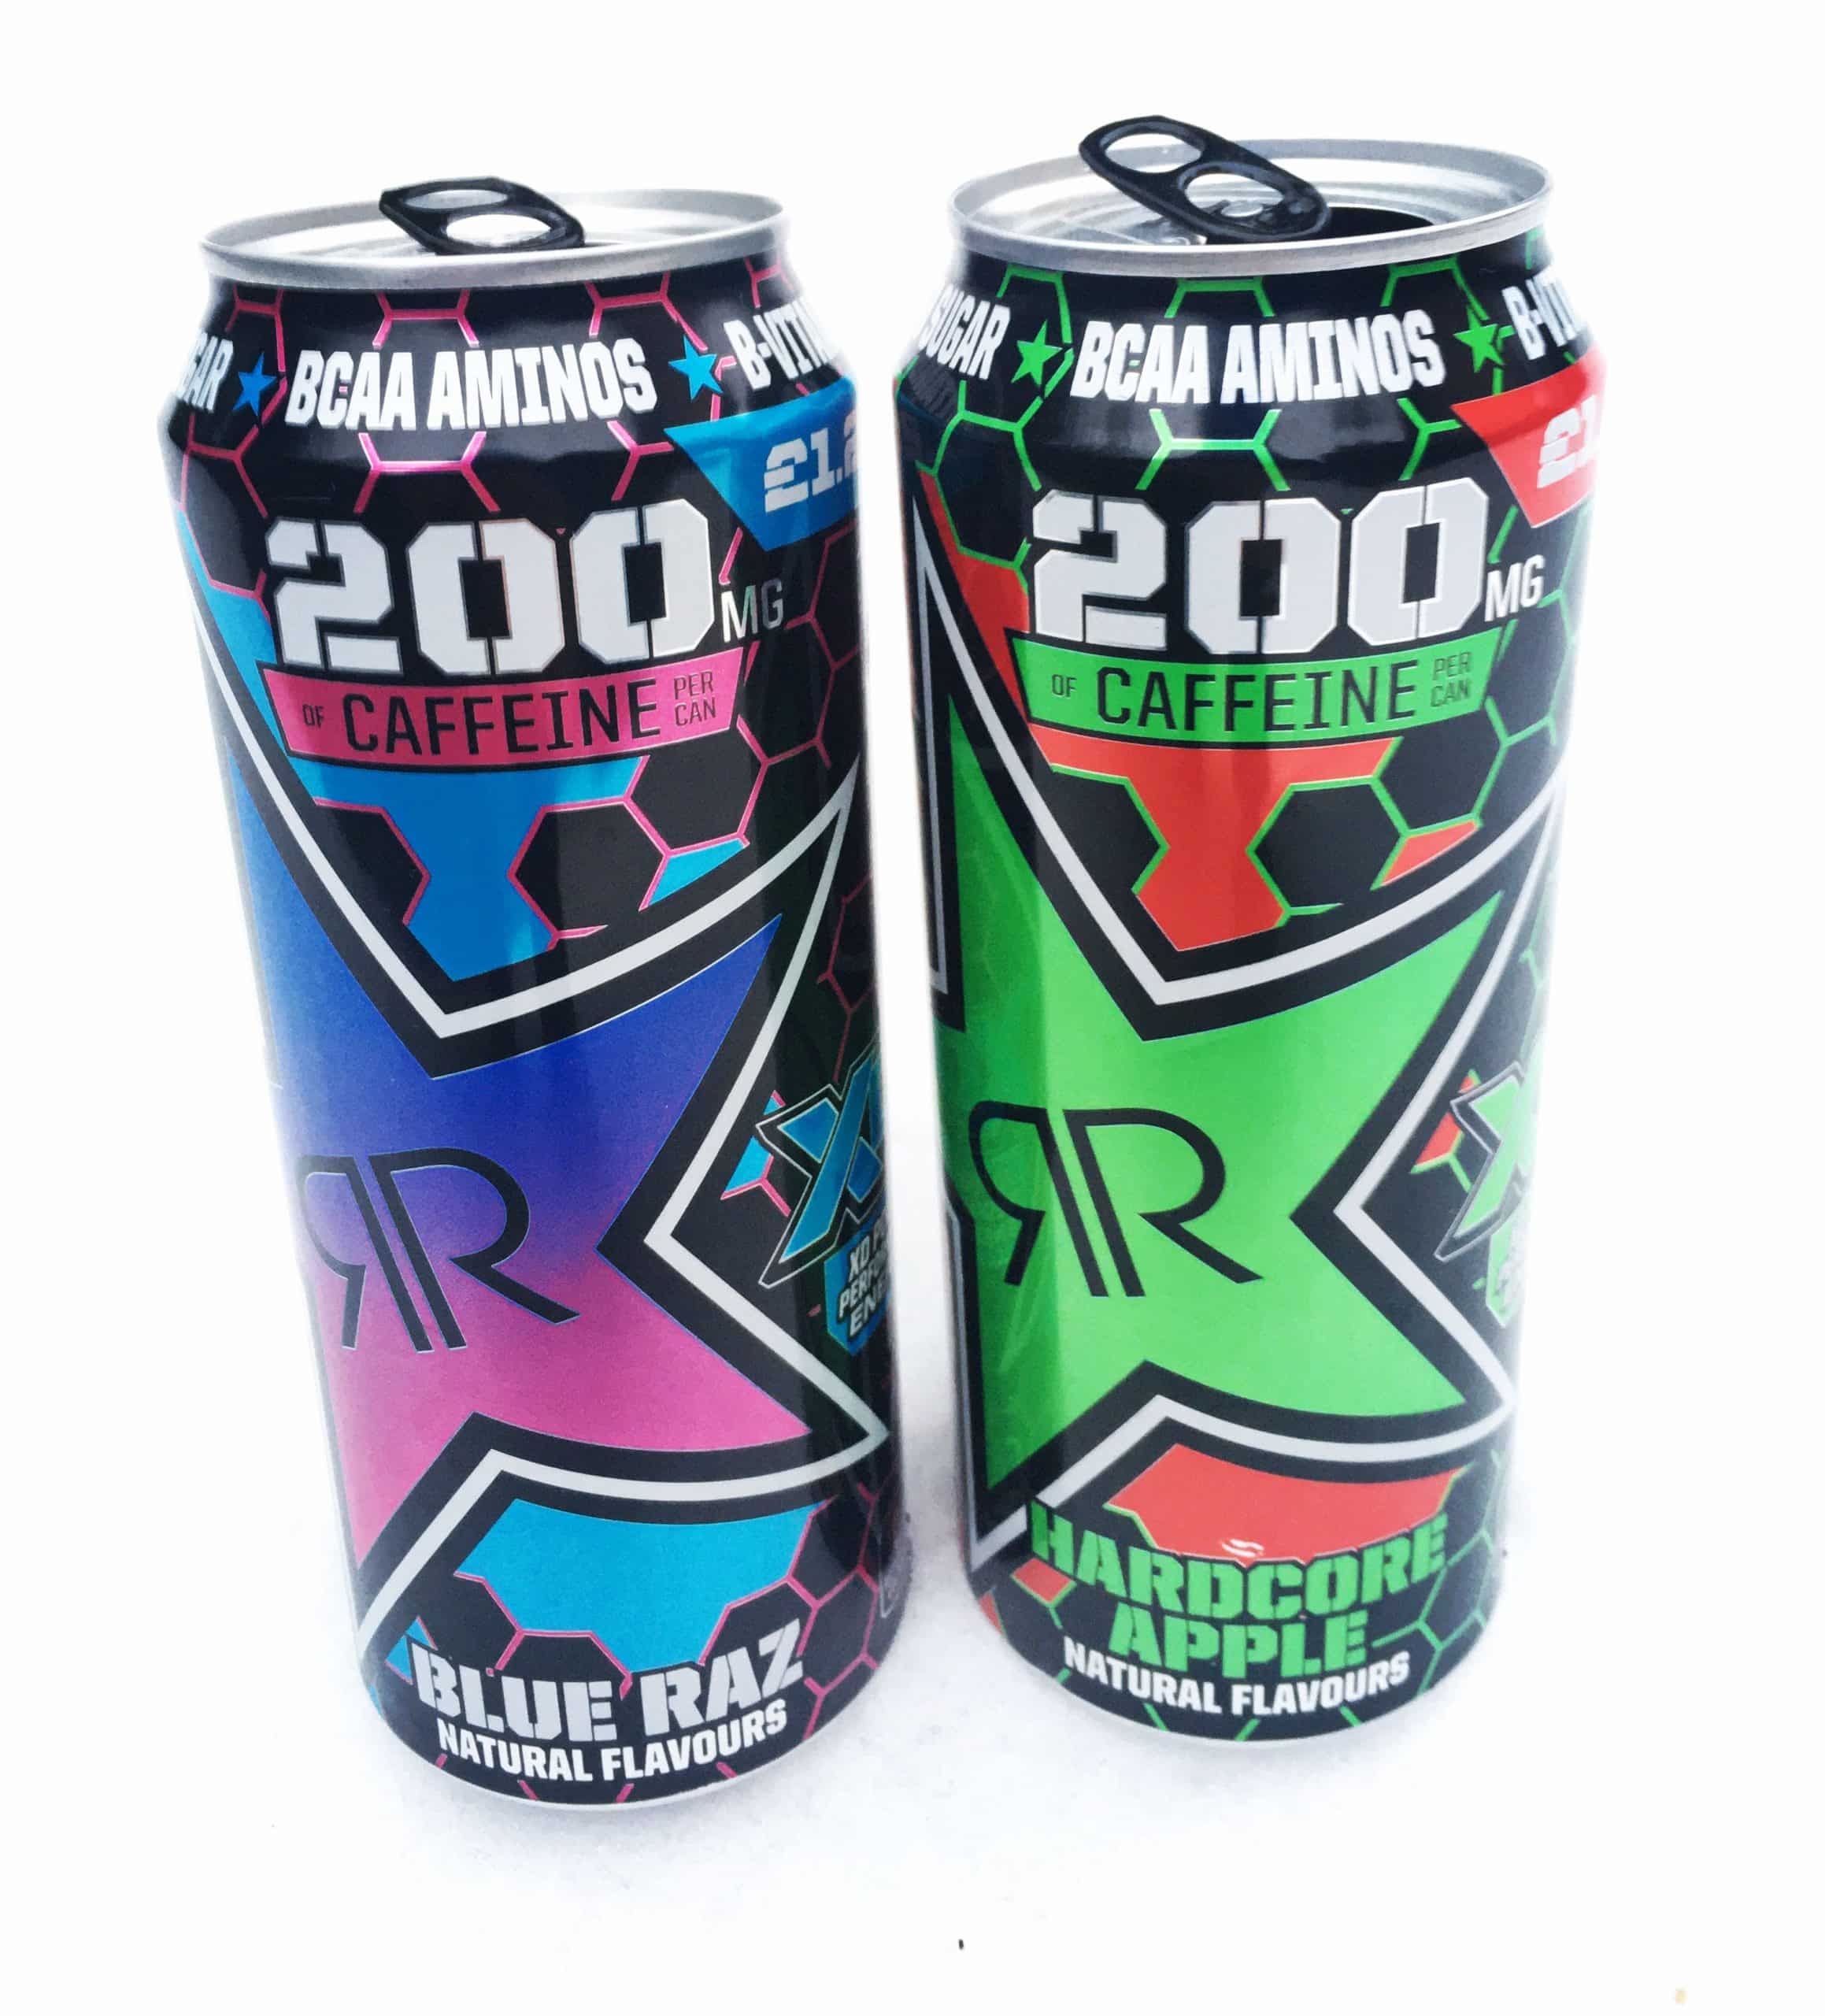 Rockstar 200 mg caffeine